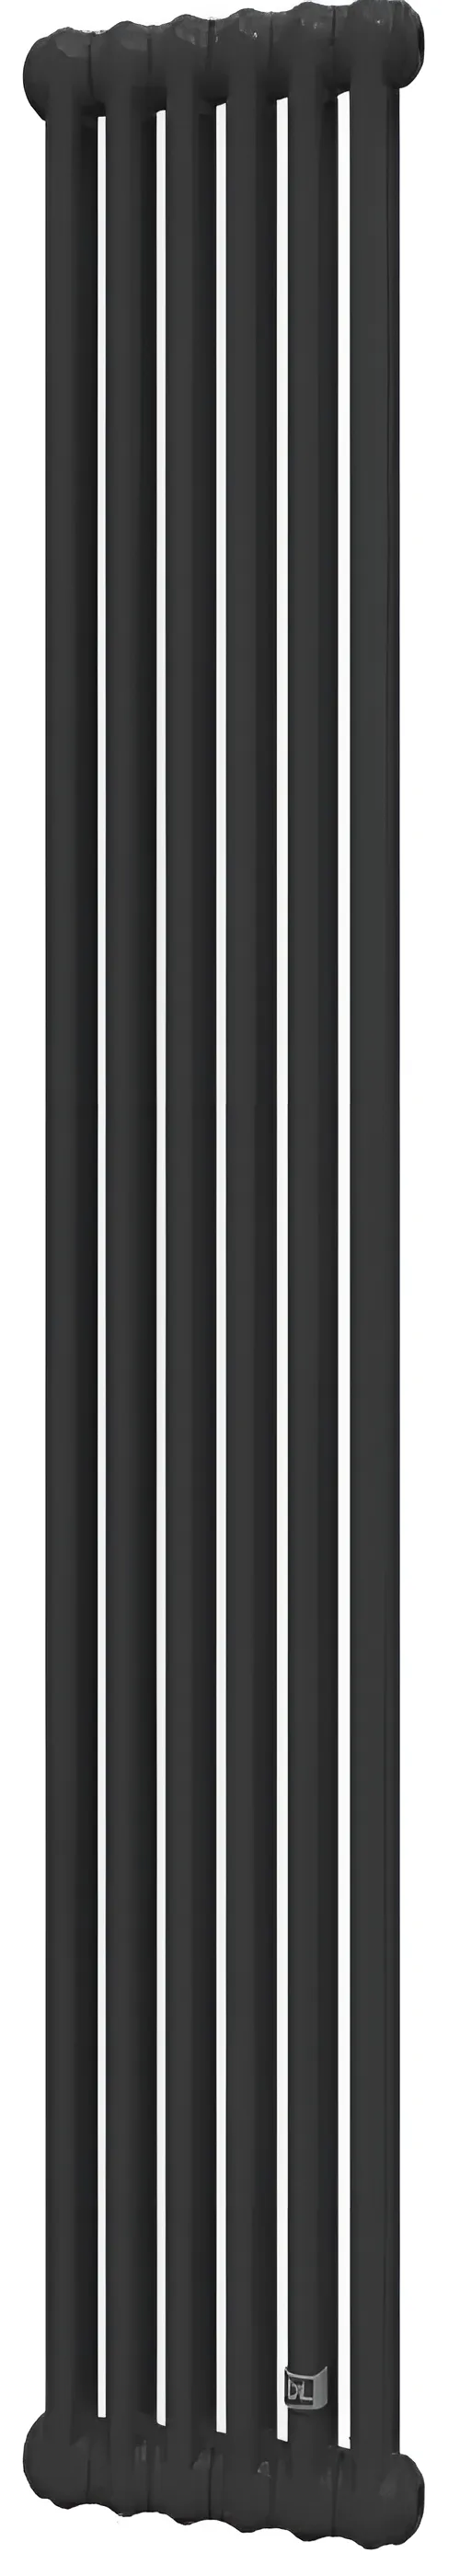 Трубчатый радиатор DeLonghi Multicolumn 1500 2 колонны 6 секций нижнее 1/2 RAL9005 MATT (0Q10215000600D0RAL9005M)